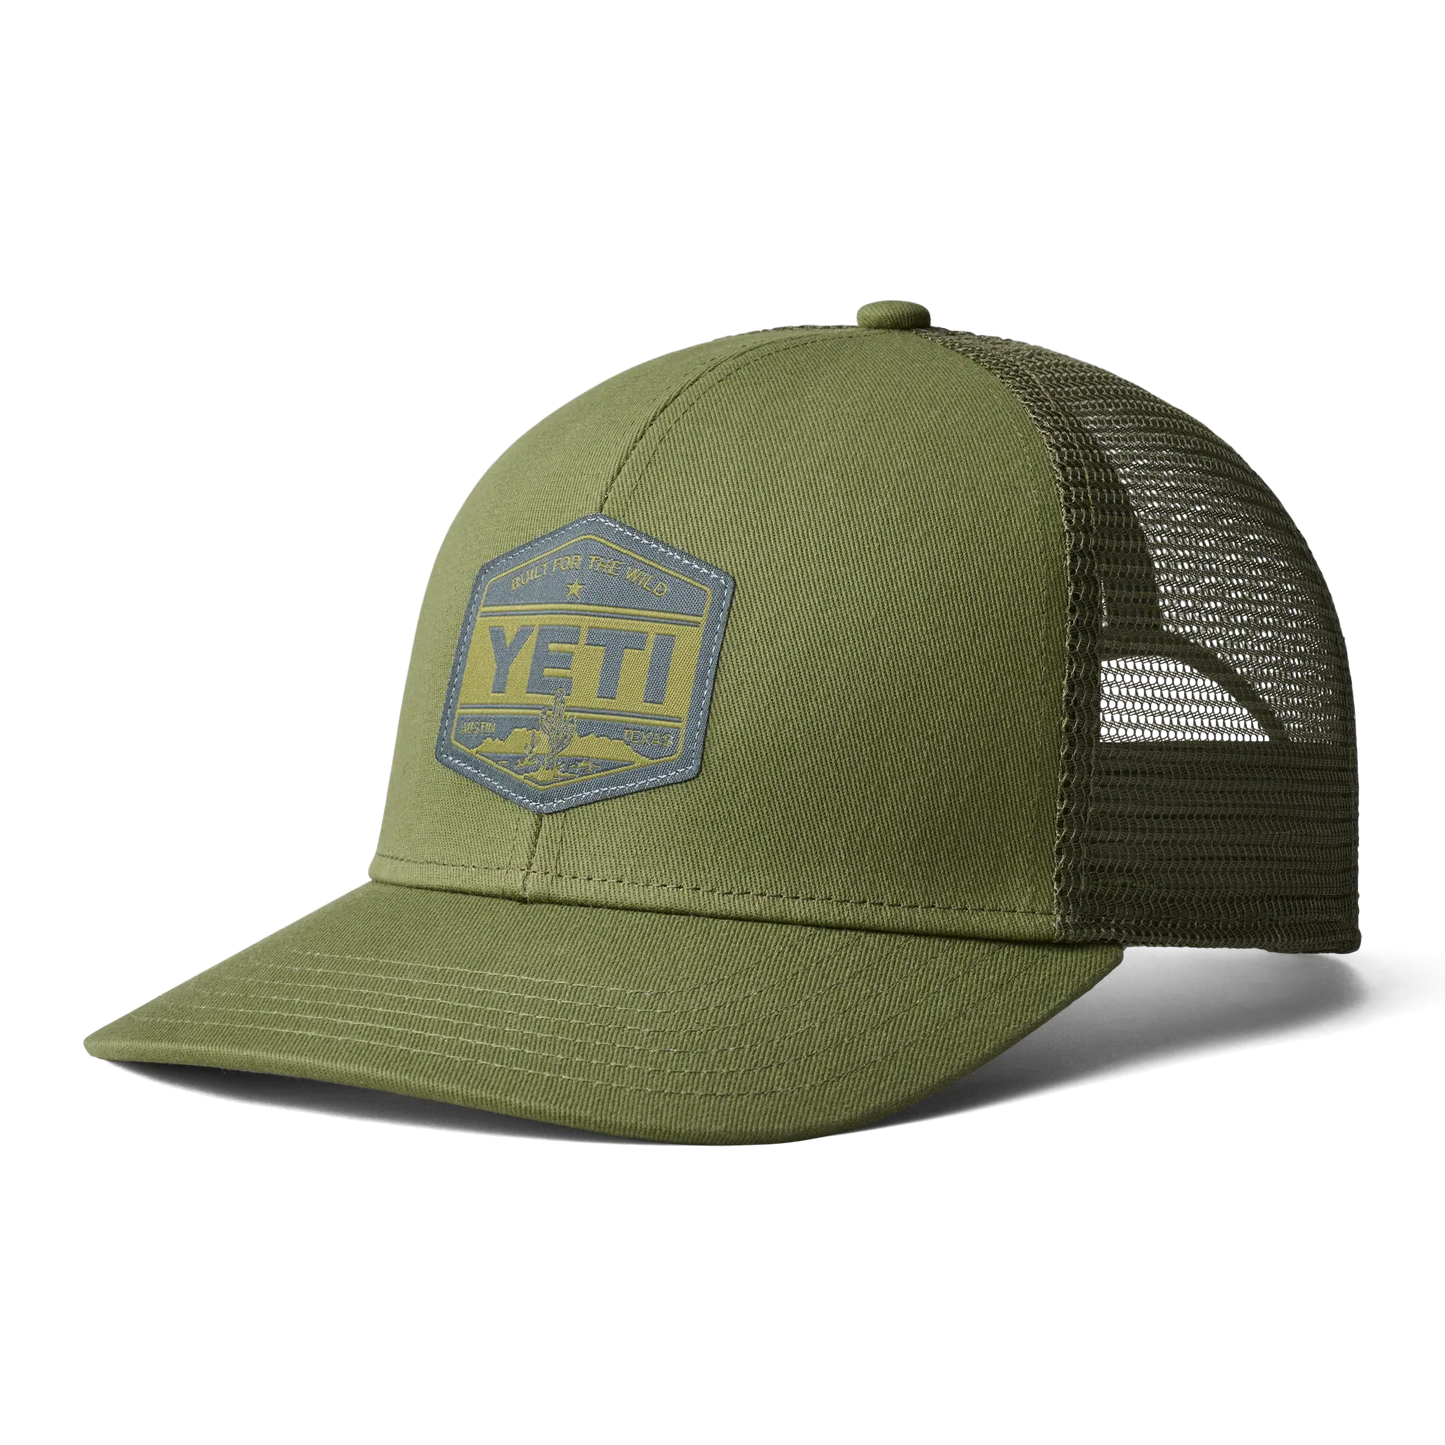 Yeti Built for the Wild Trucker Hat-Hats & Headwear-Yeti-Dark Moss-Fishing Station